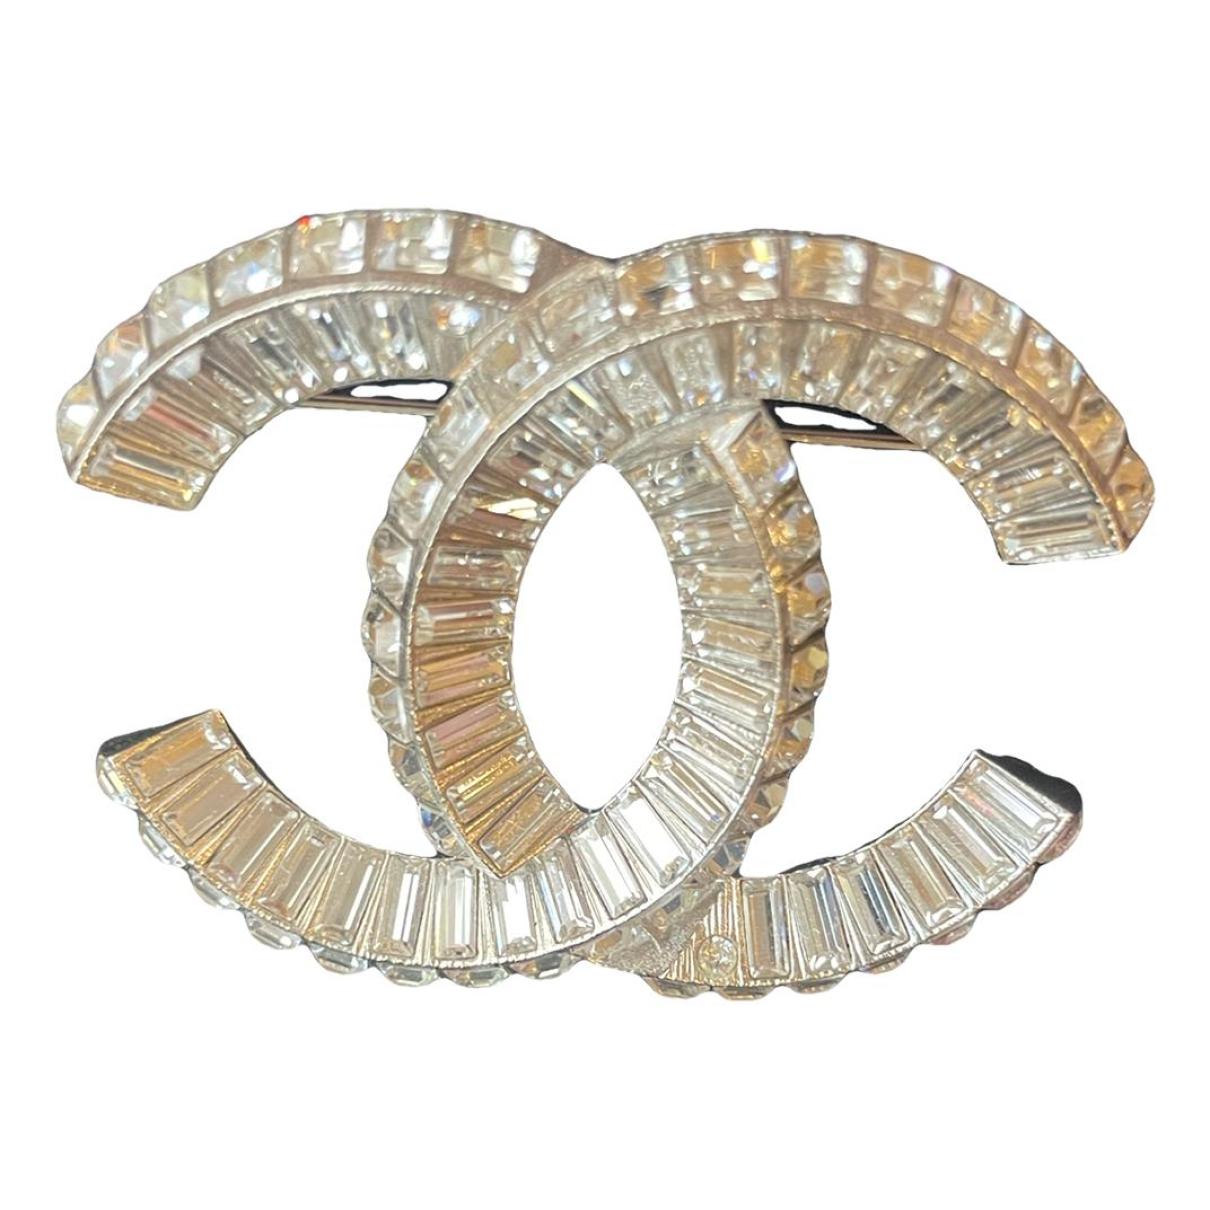 Cc pin & brooche Chanel Silver in Metal - 33234160